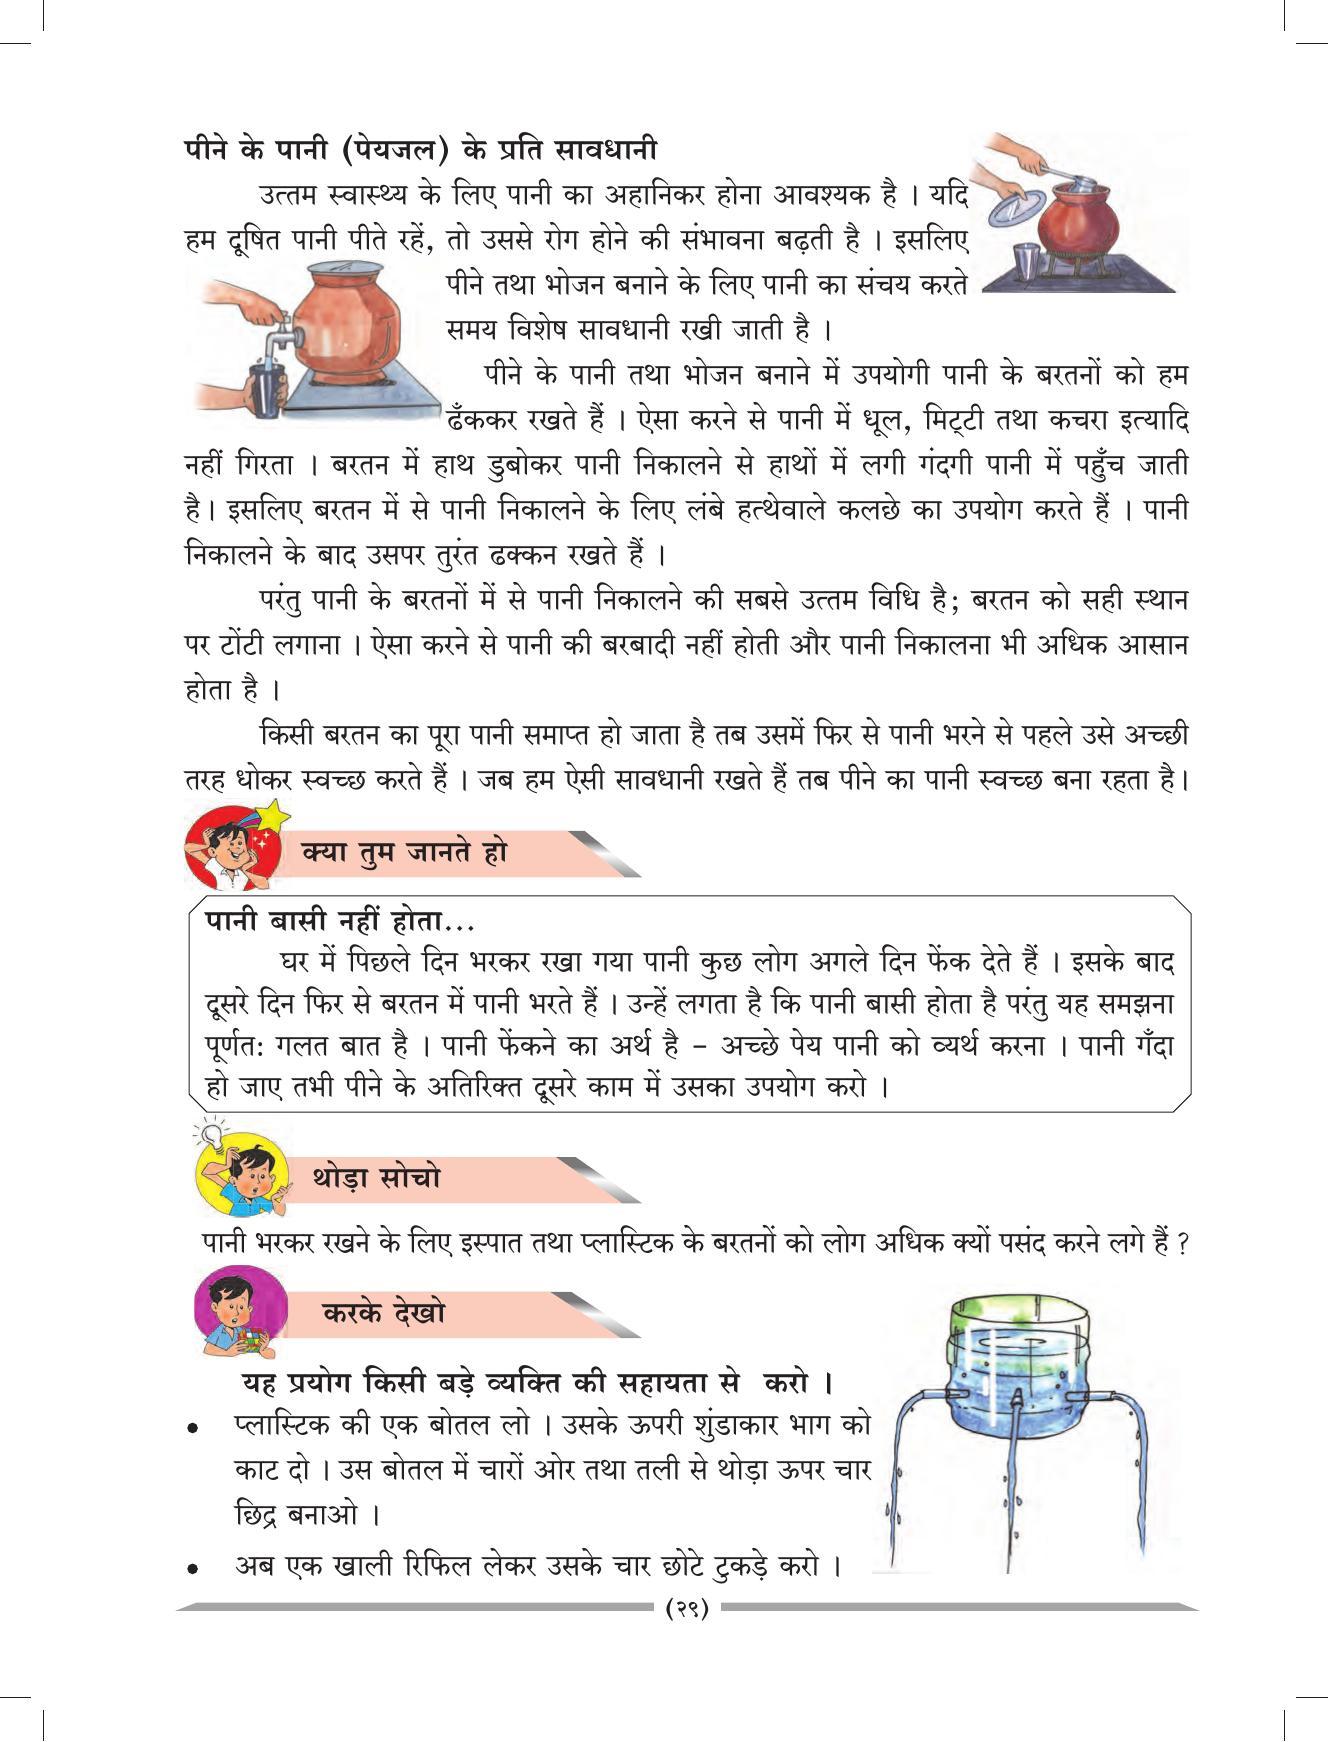 Maharashtra Board Class 4 EVS 1 (Hindi Medium) Textbook - Page 39